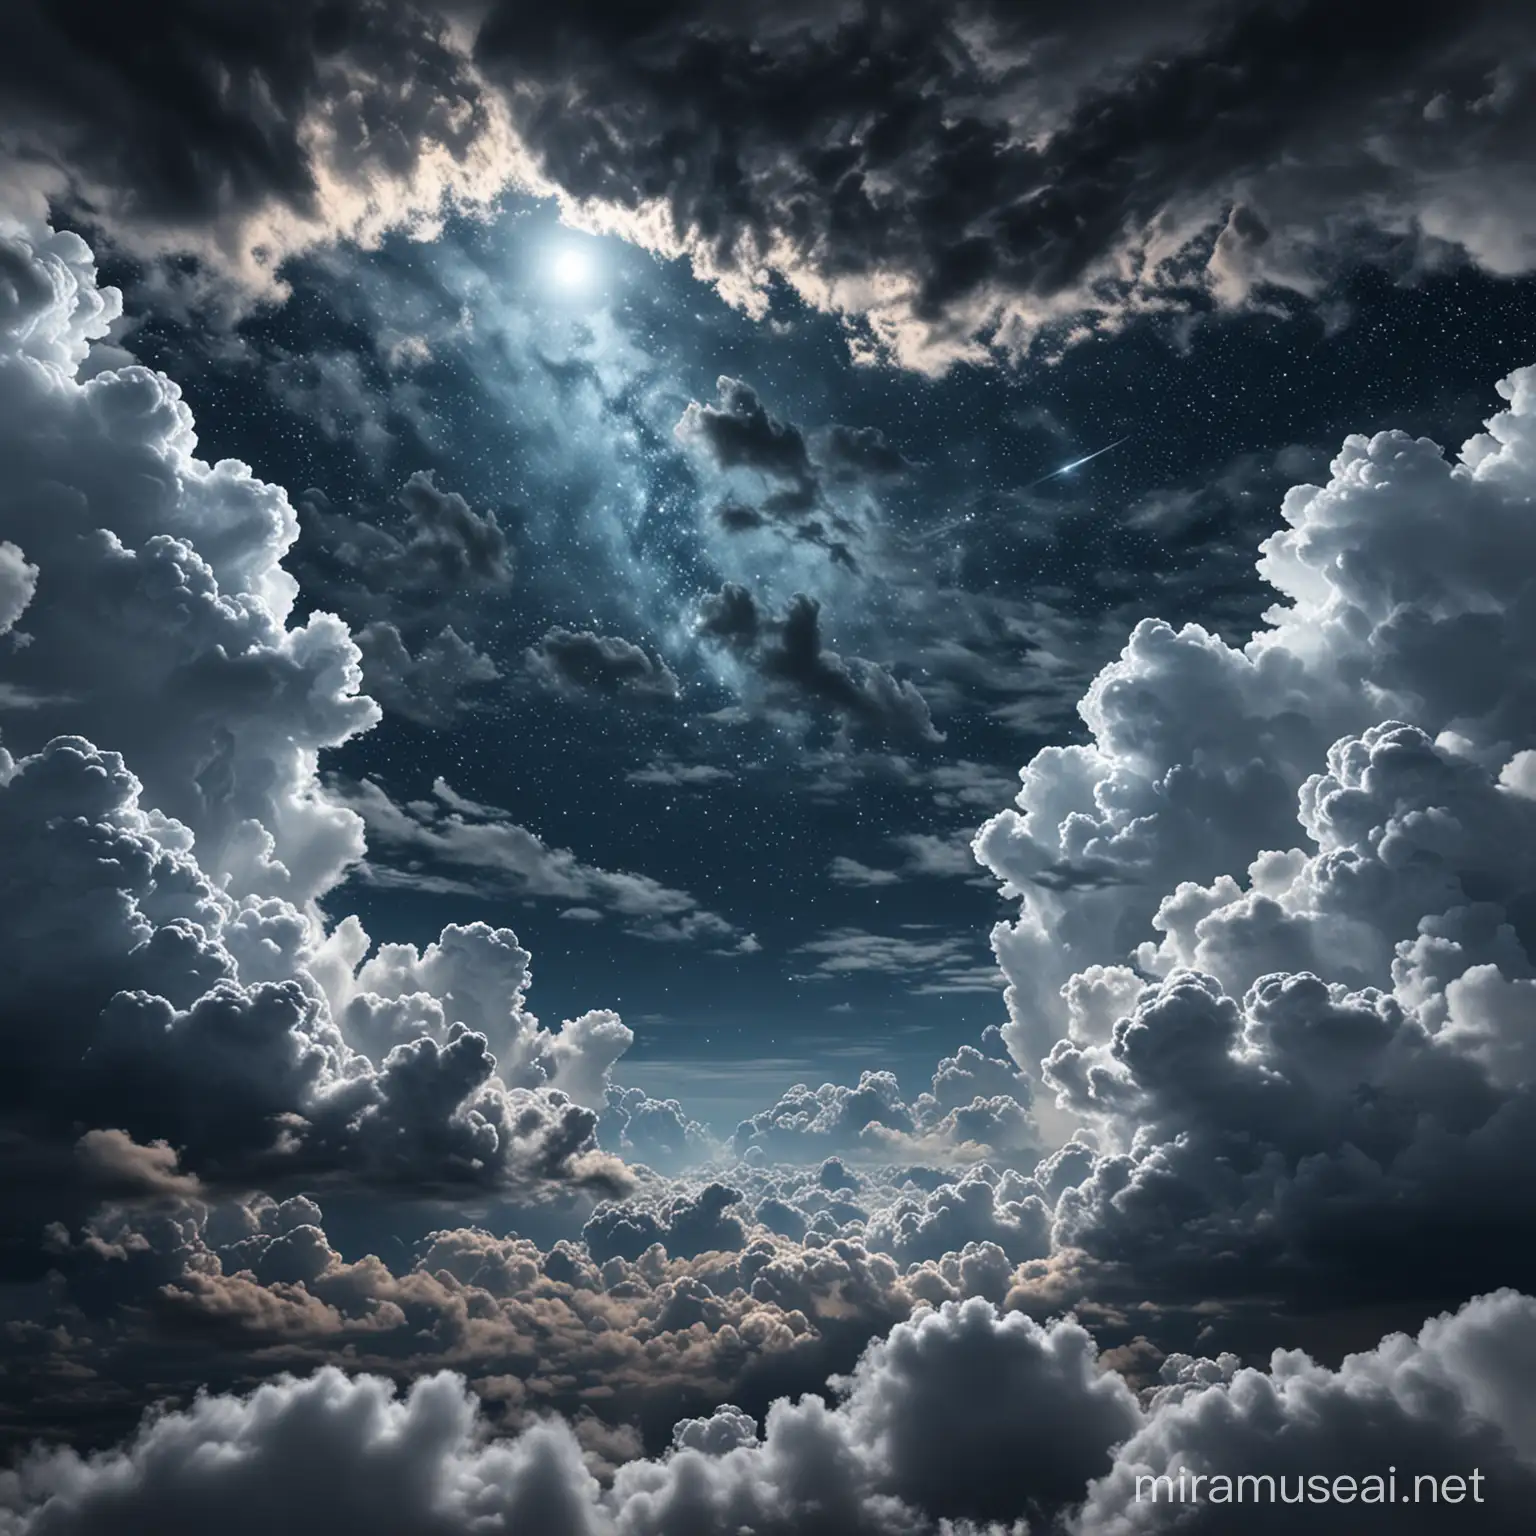 Starry Night Sky Peeking Through Clouds UltraRealistic View